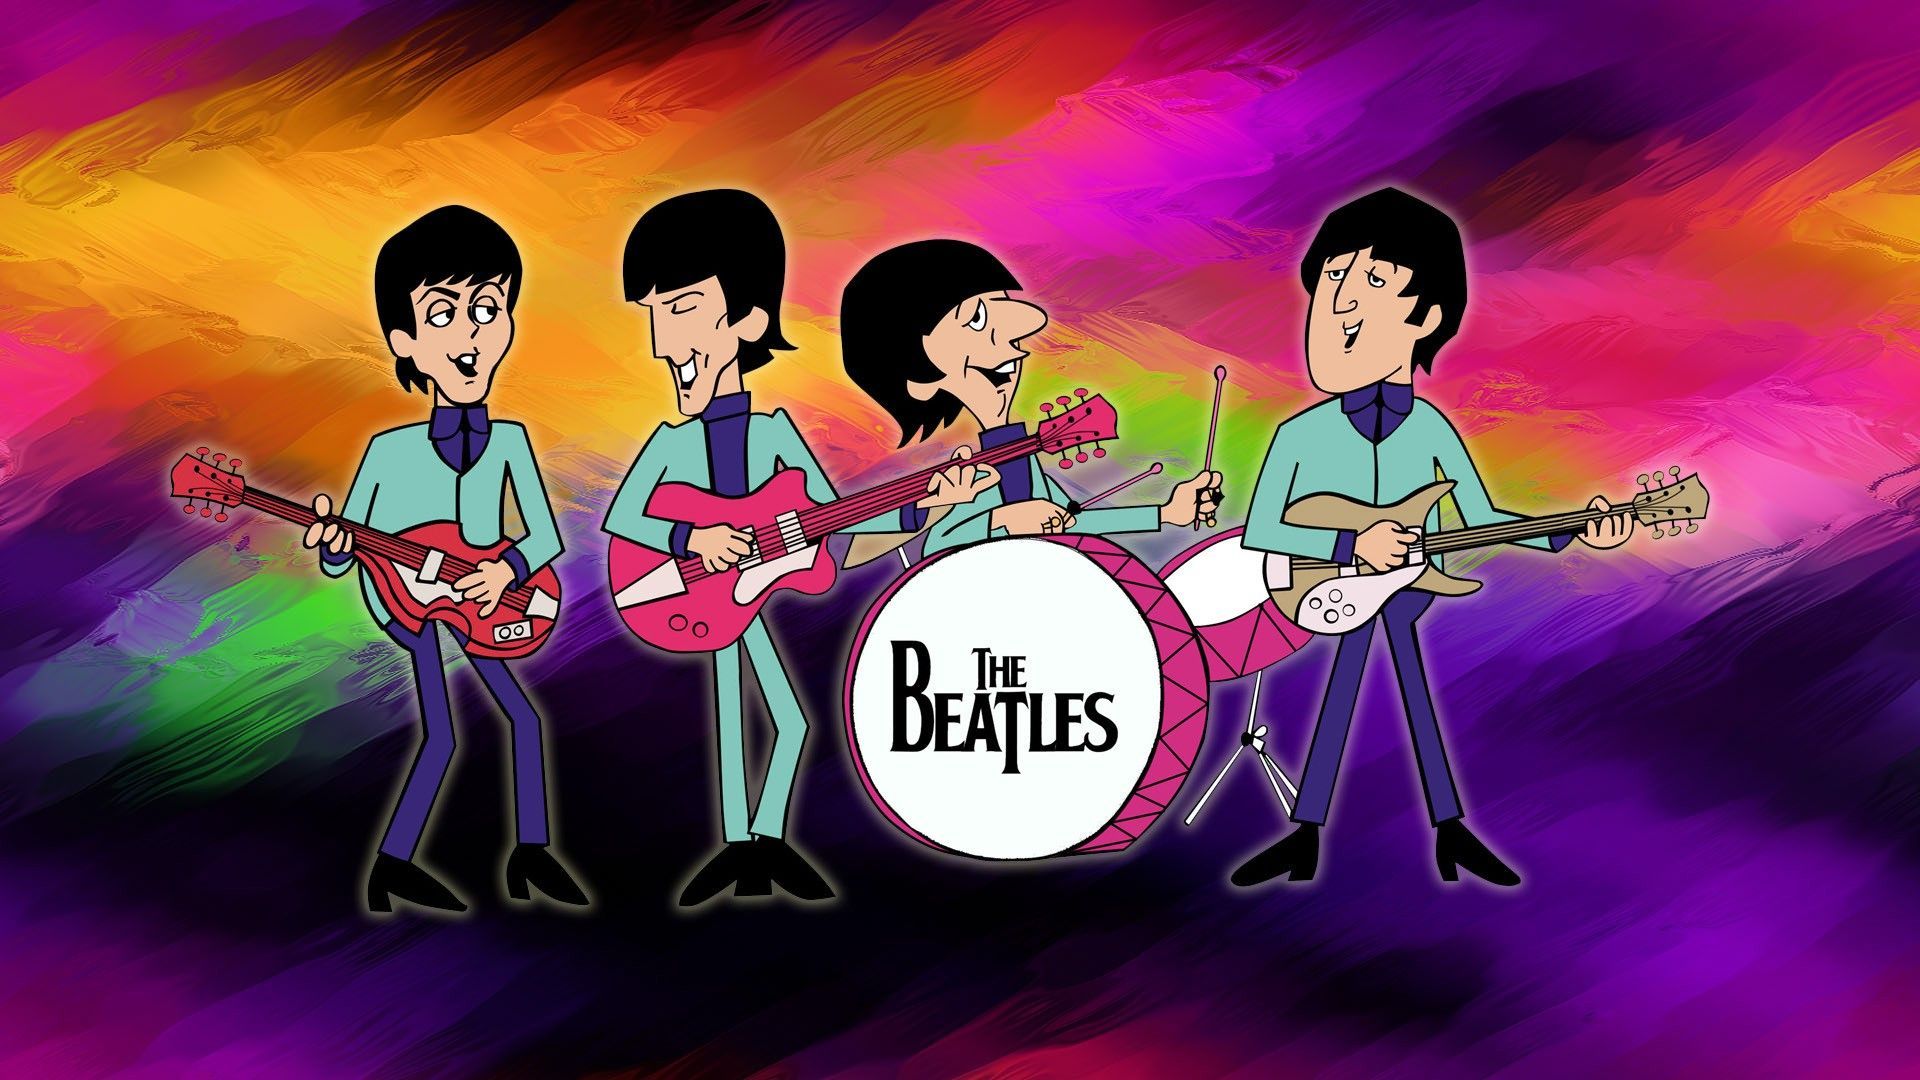 The Beatles desktop wallpaper - The Beatles Wallpaper 33733742